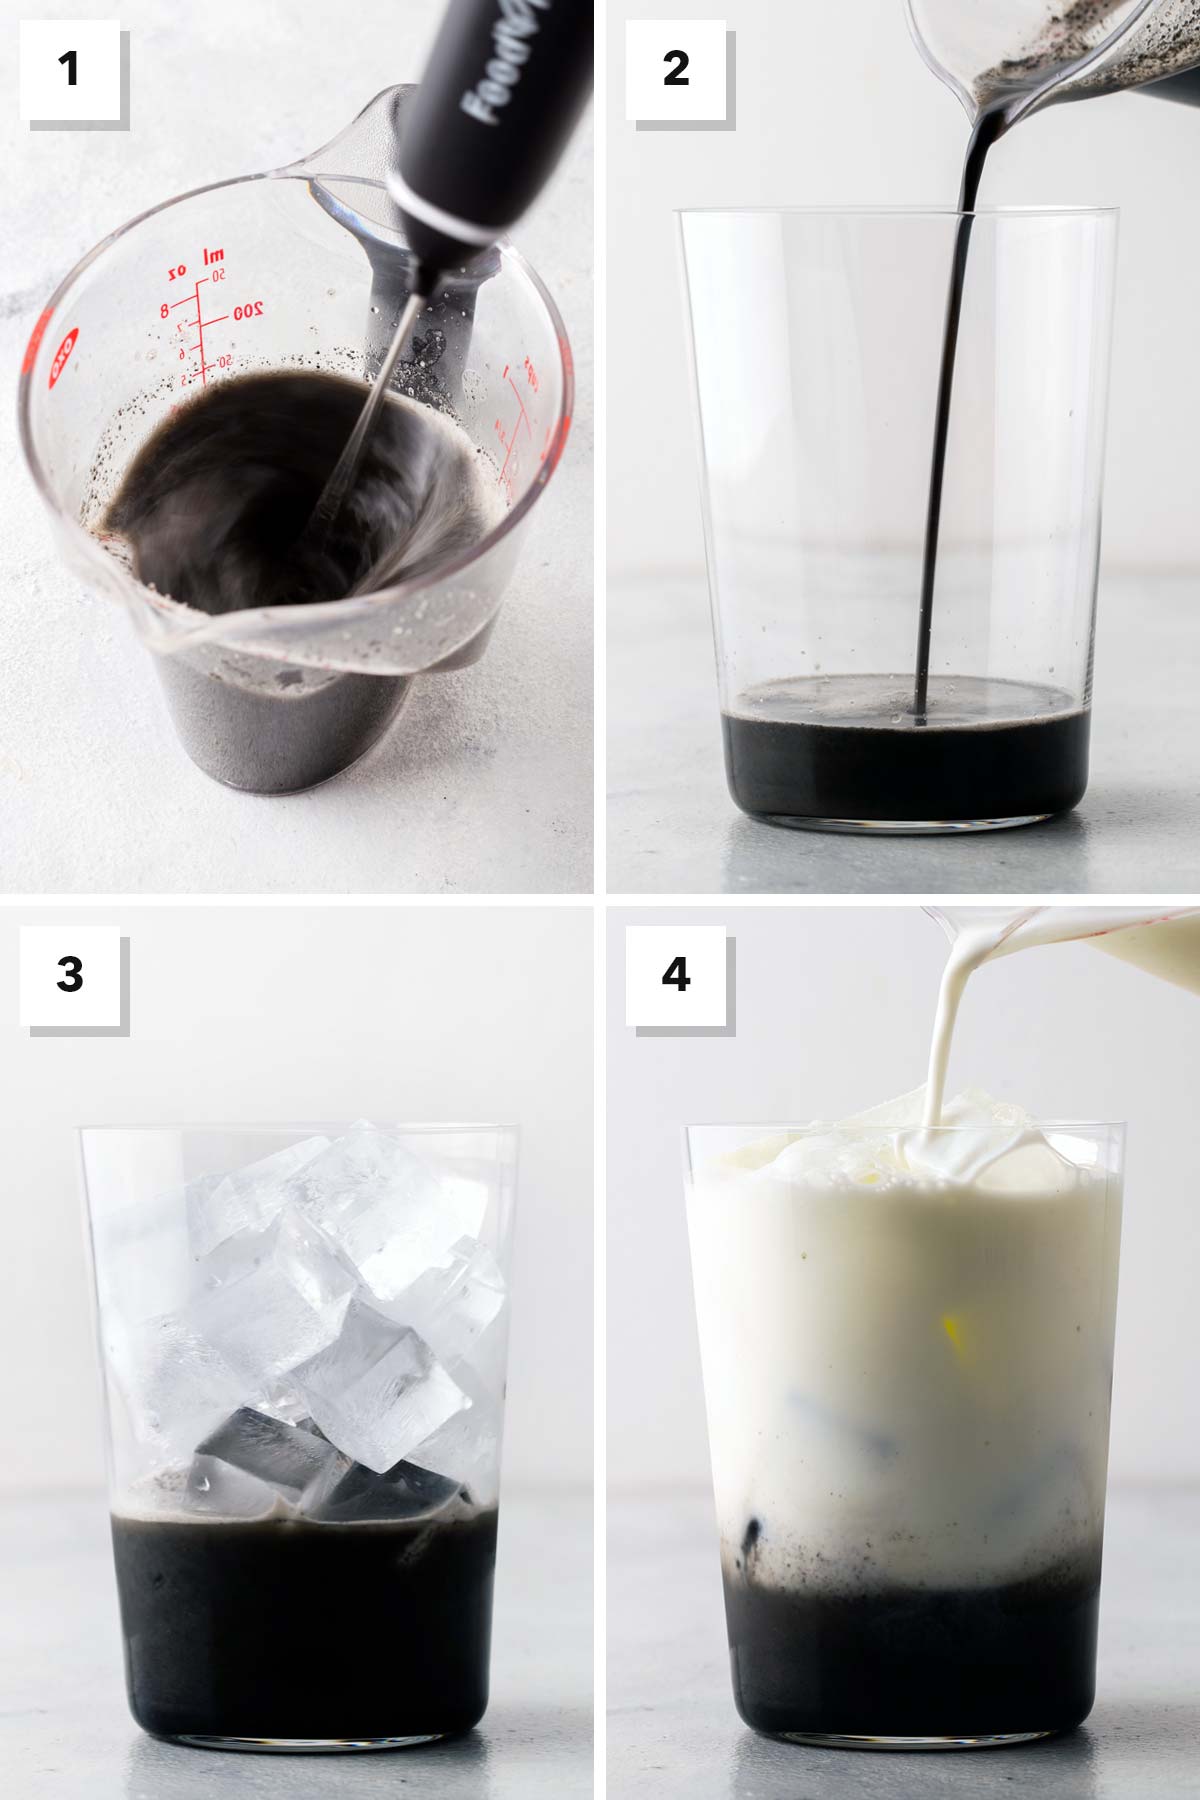 Iced Black Sesame Latte instructional steps in photos.